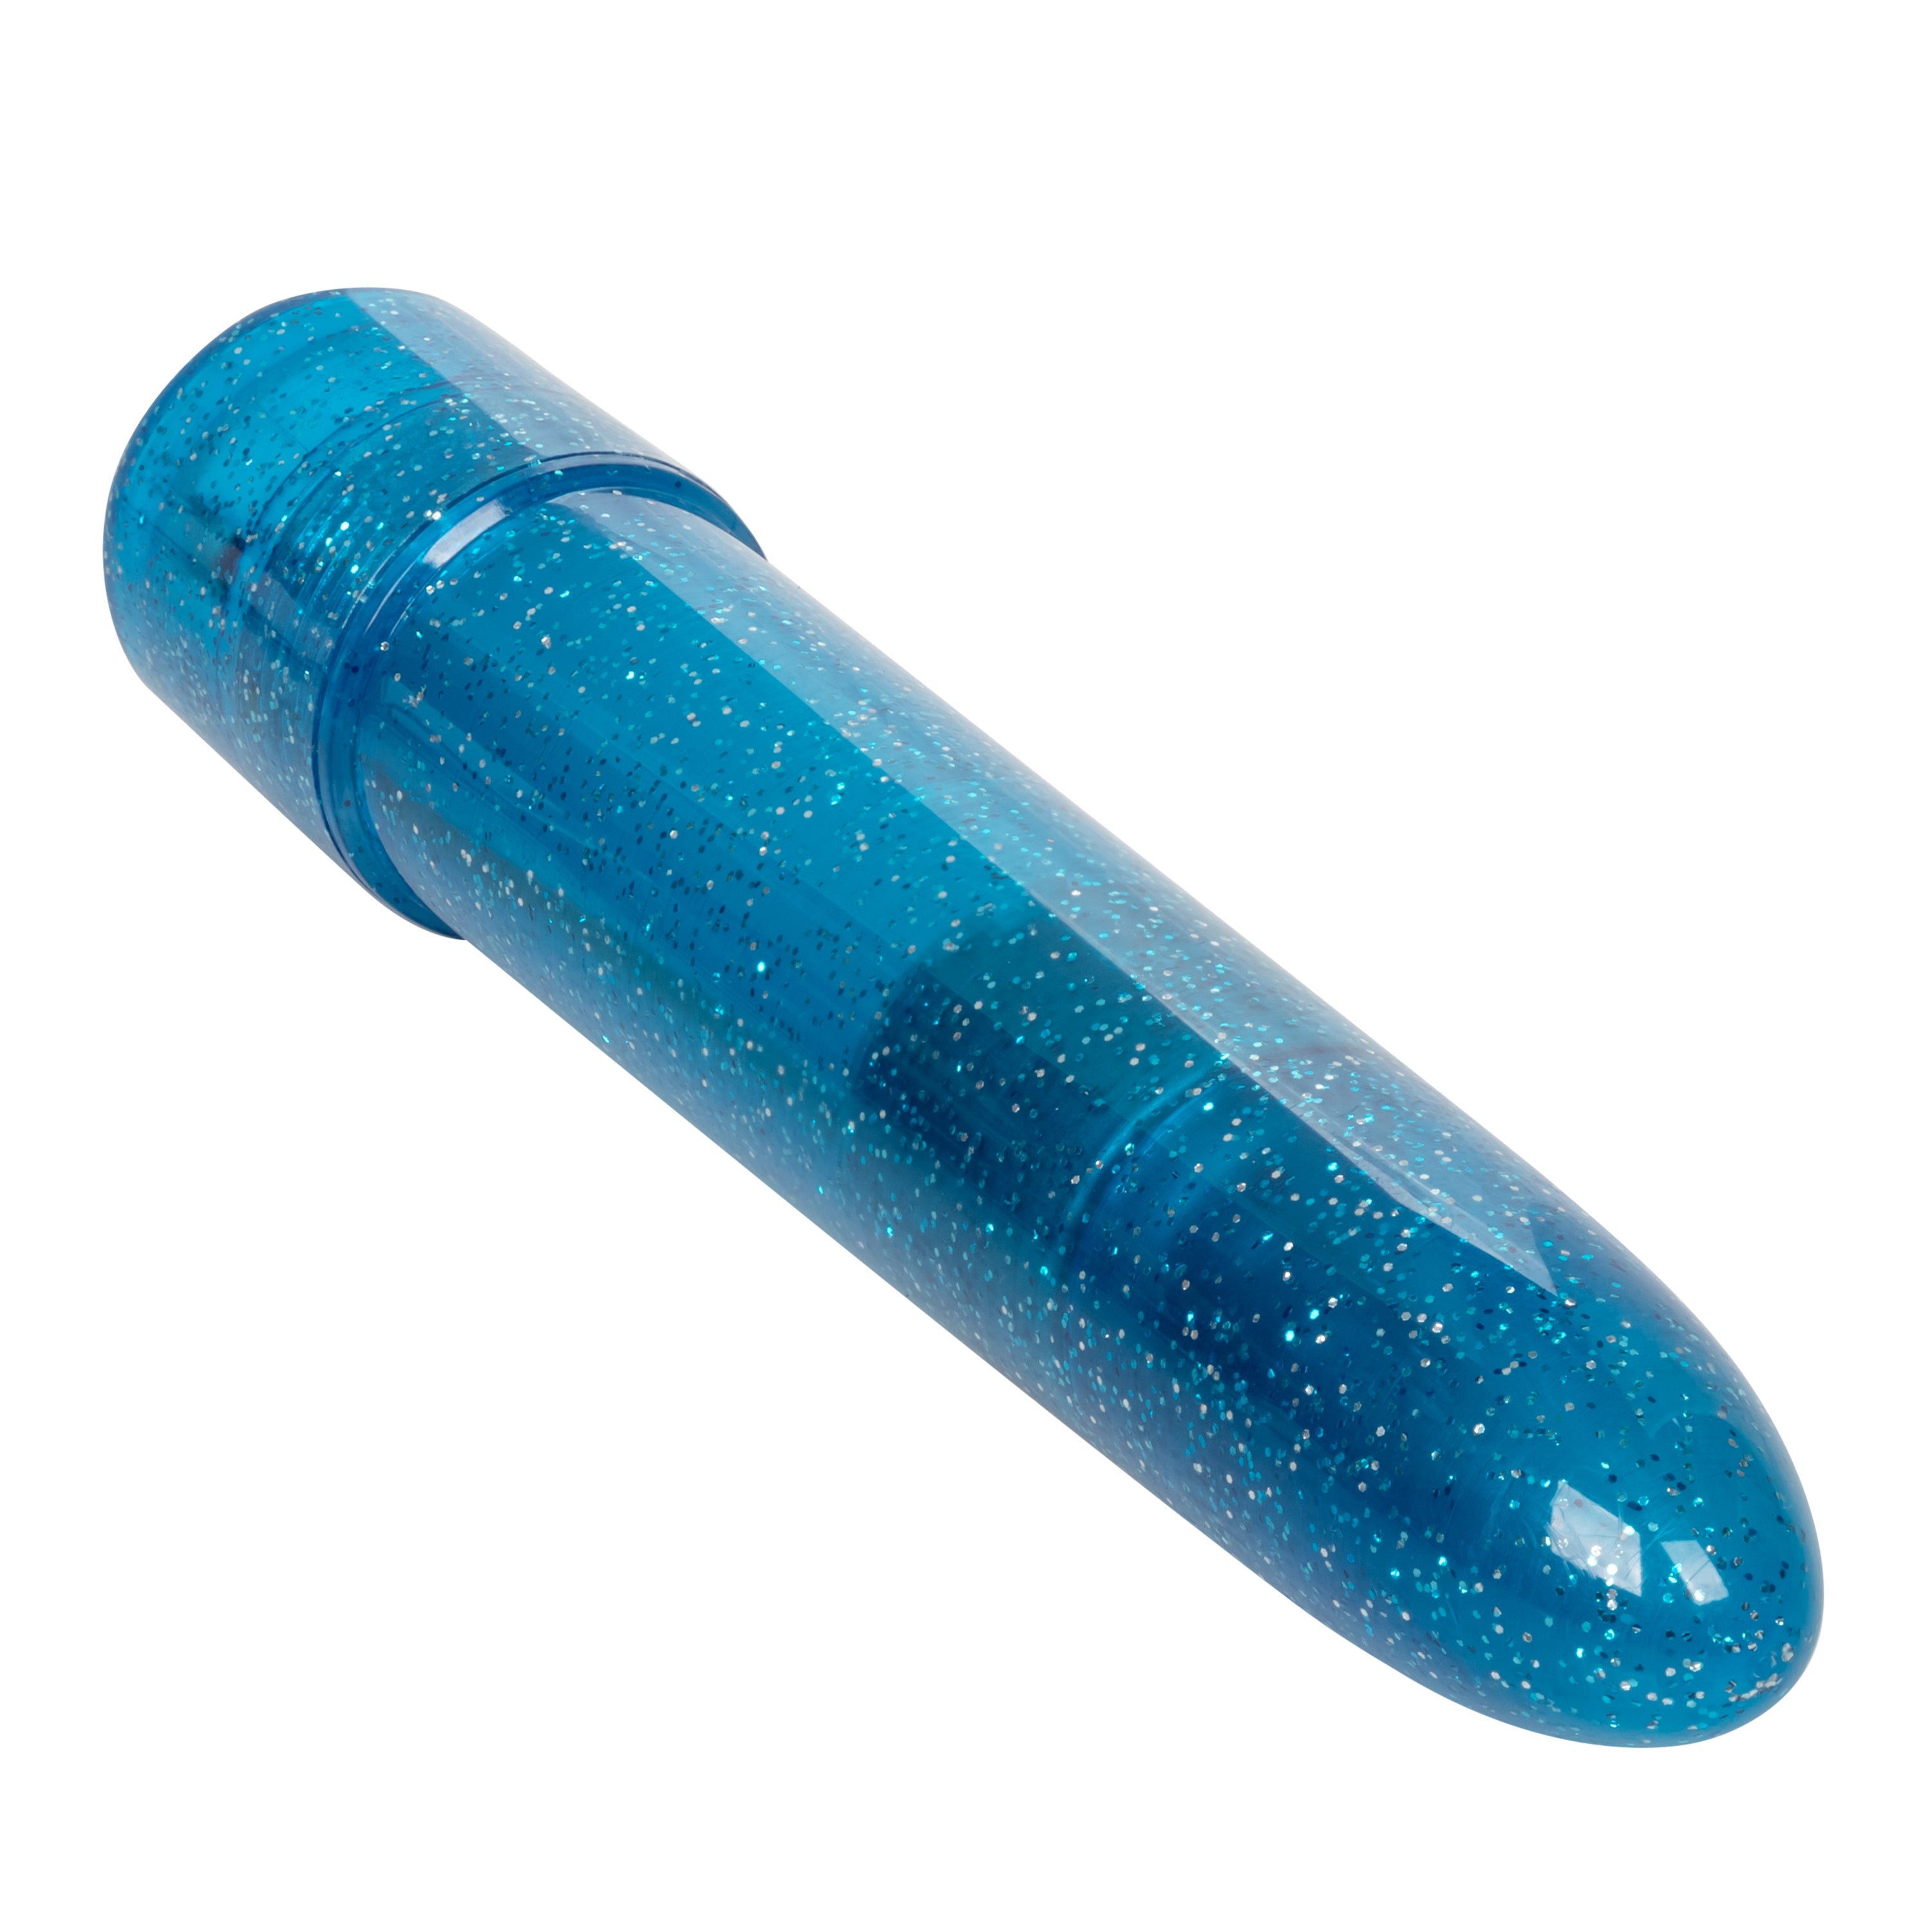 Sparkle Mini Vibe - Blue - Horny Stoner